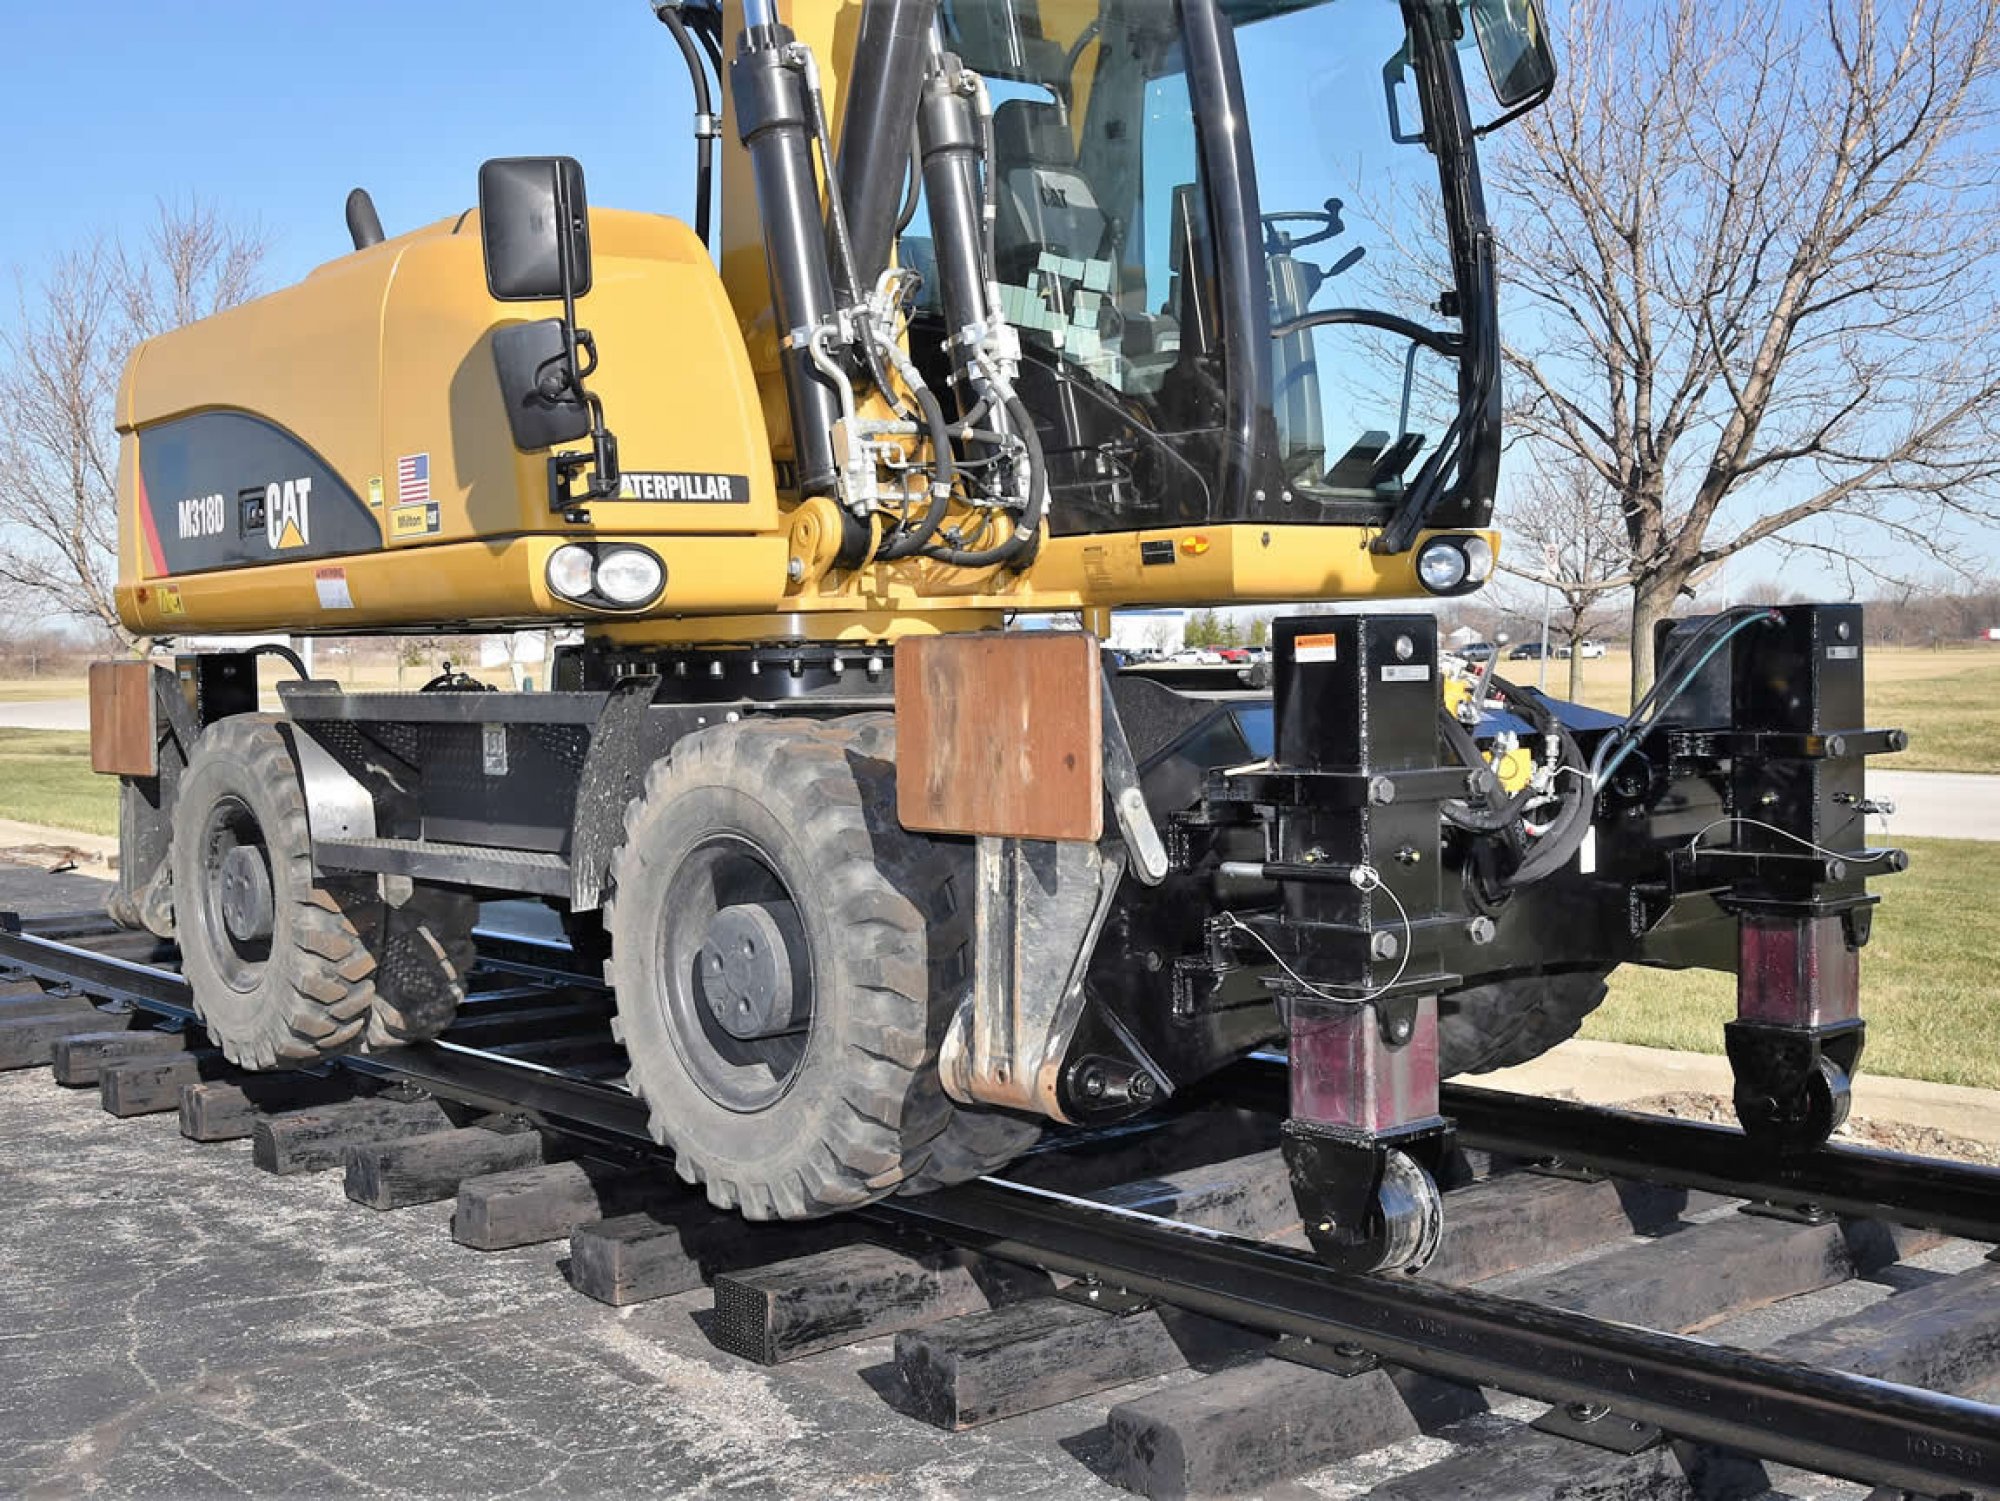 Excavator - Rubber Tired - Rail Gear